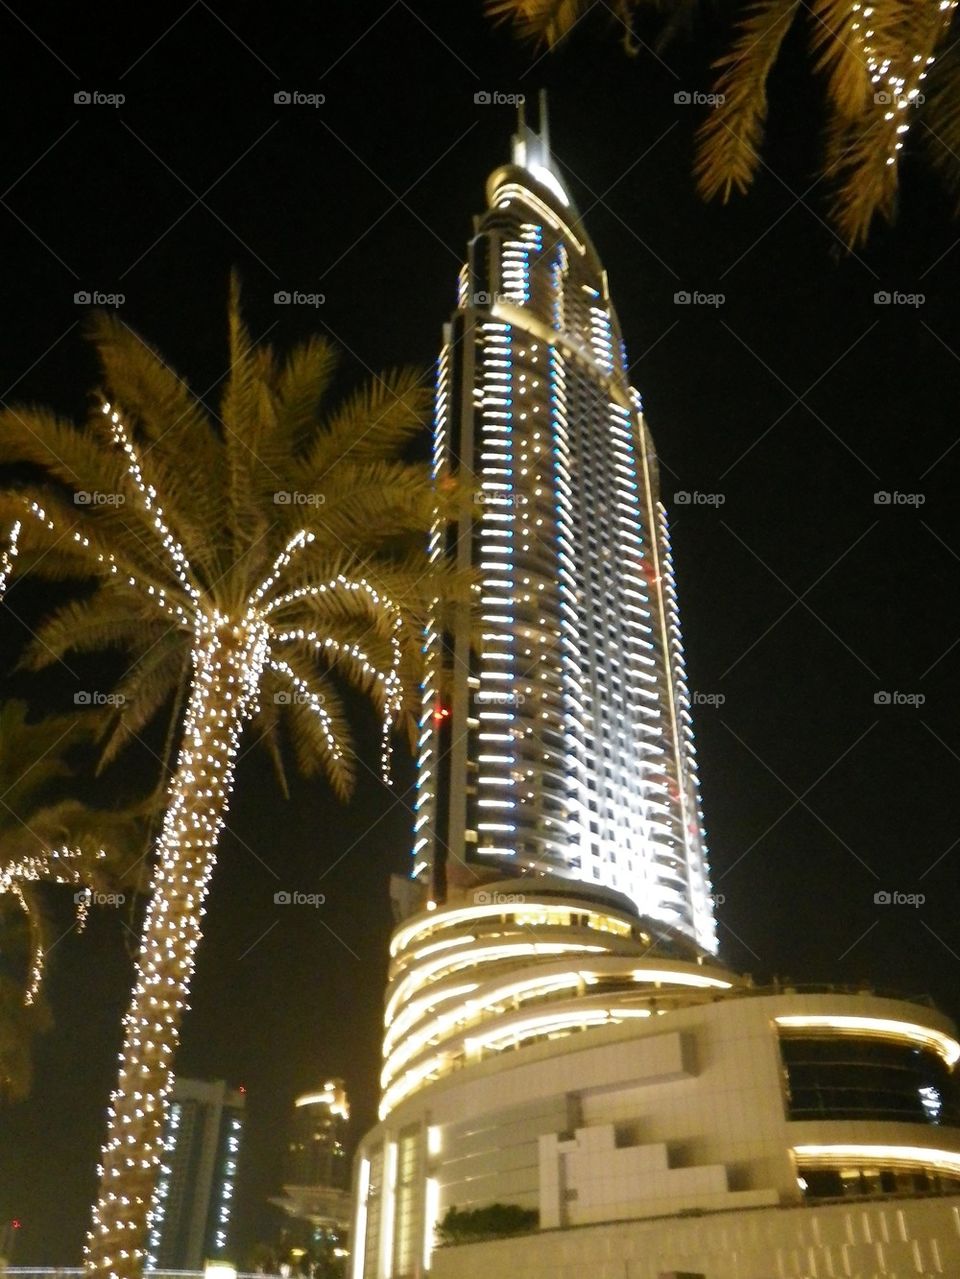 Tallest Building